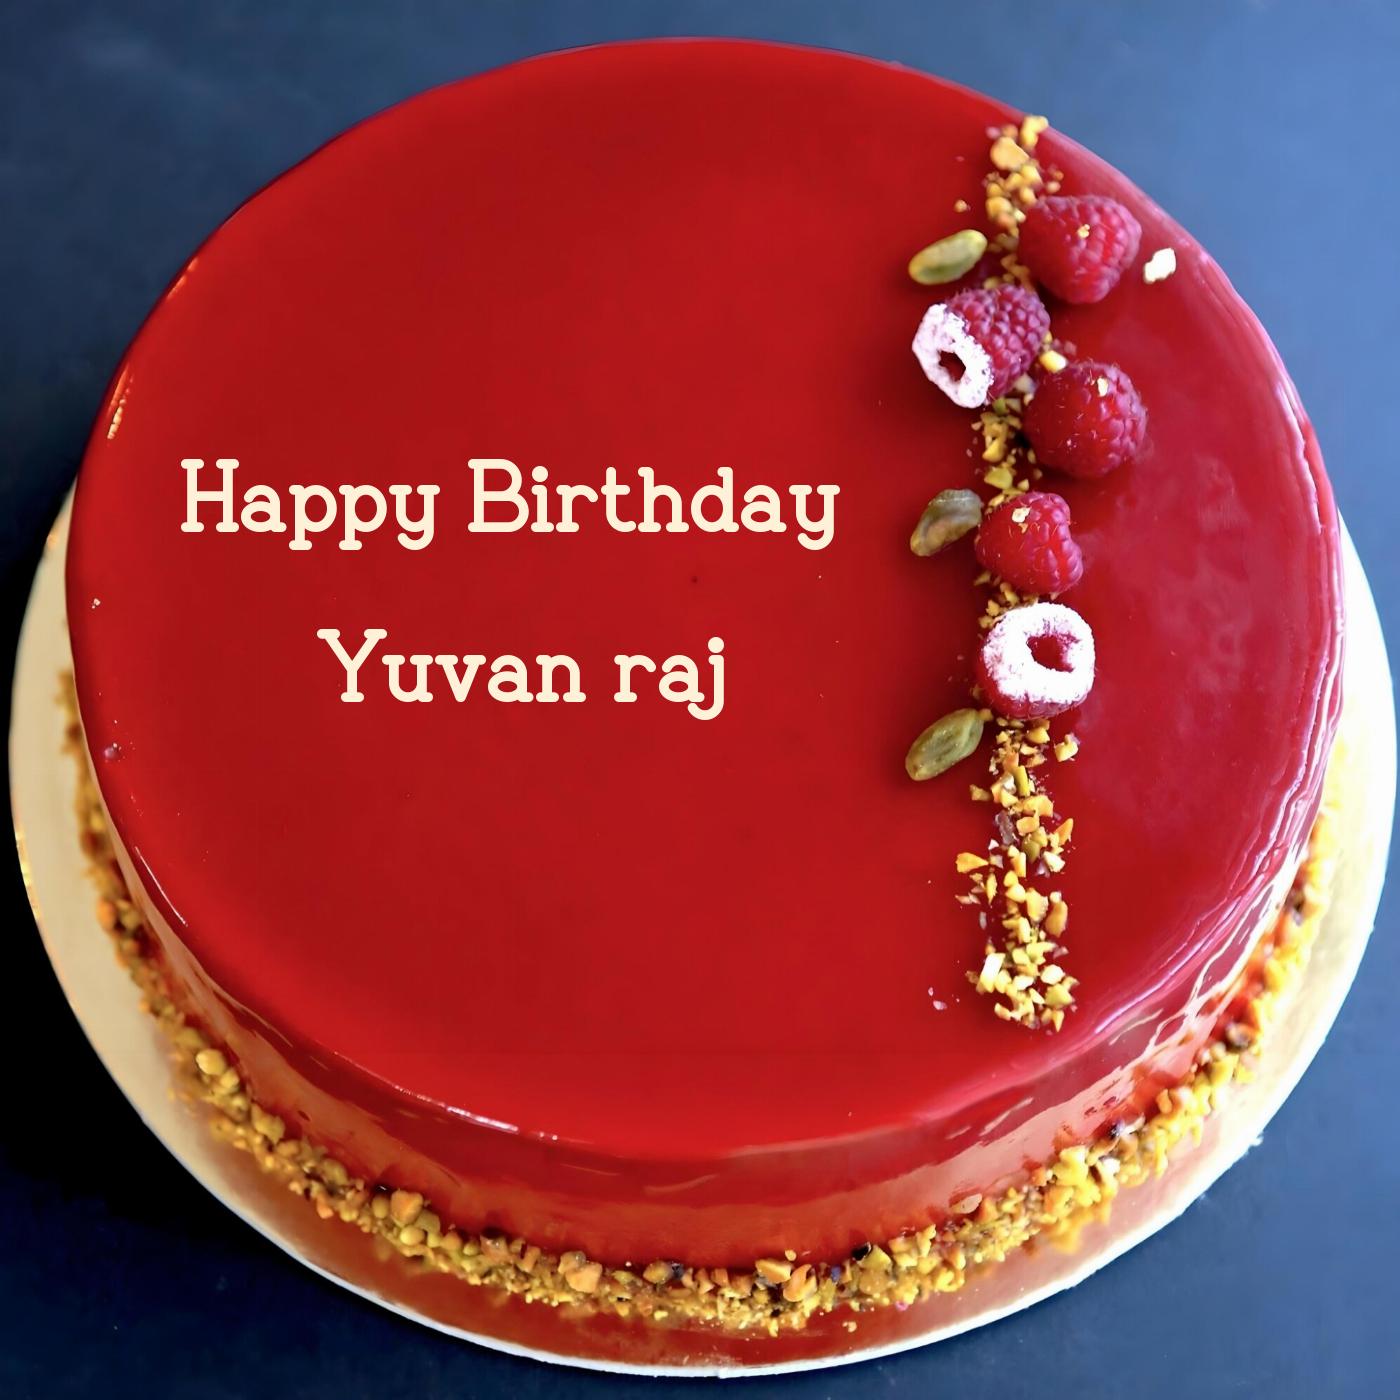 Happy Birthday Yuvan raj Red Raspberry Cake